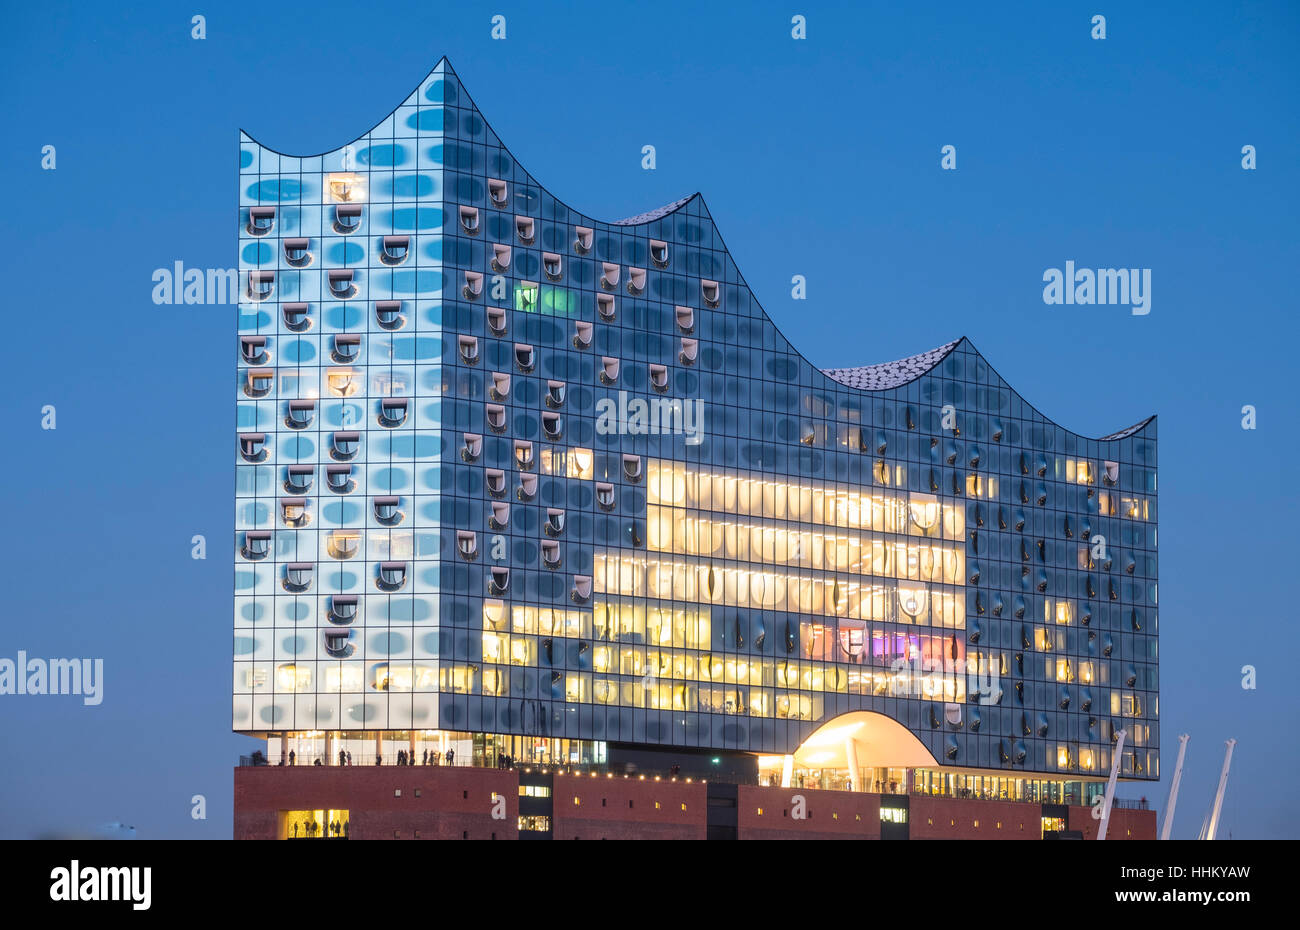 Elbphilharmonie di Amburgo, Germania; vista della nuova Elbphilharmonie opera house di Amburgo, Germania. Foto Stock